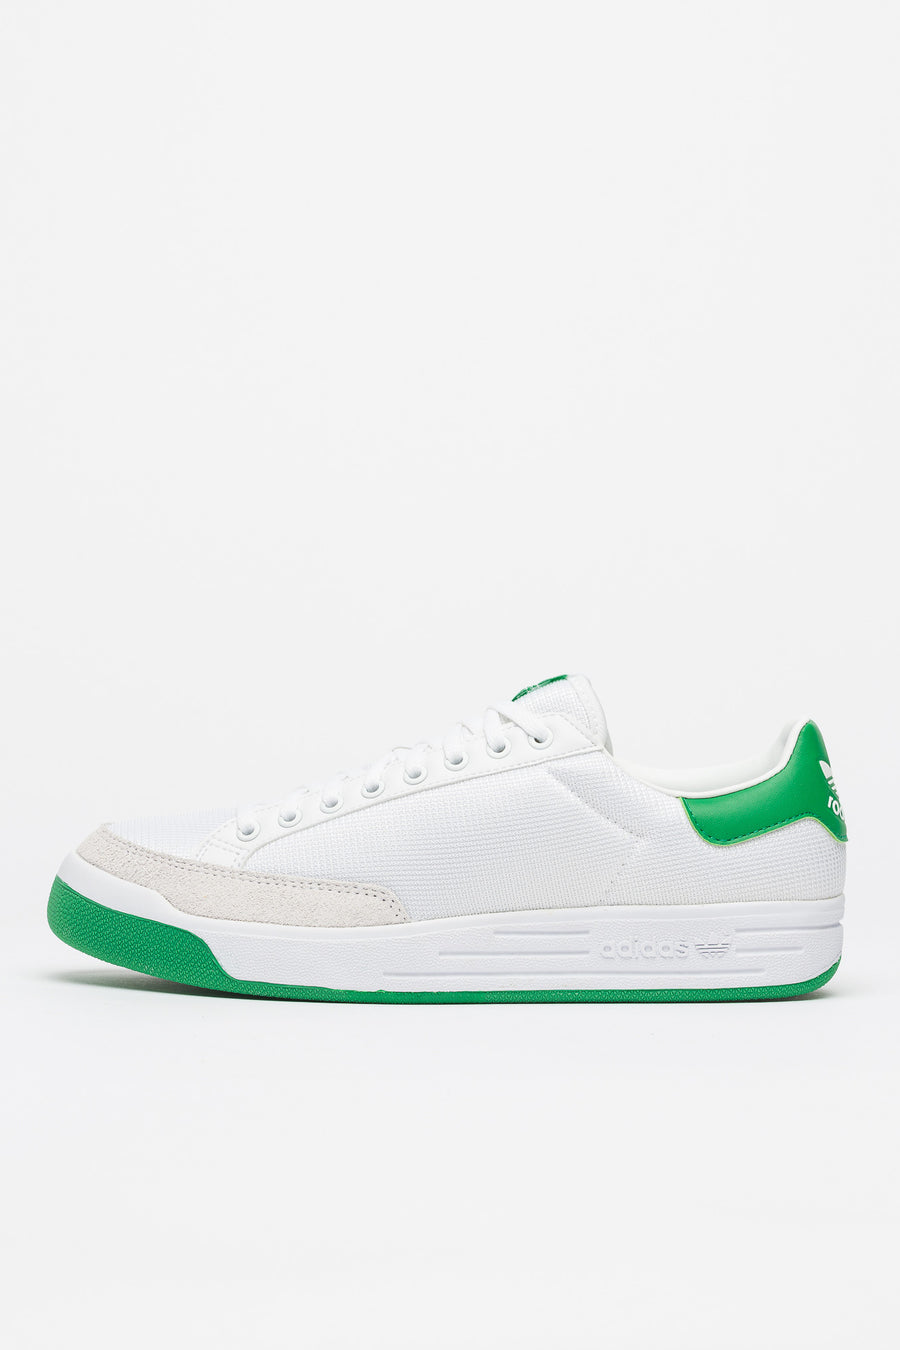 adidas rod laver green white